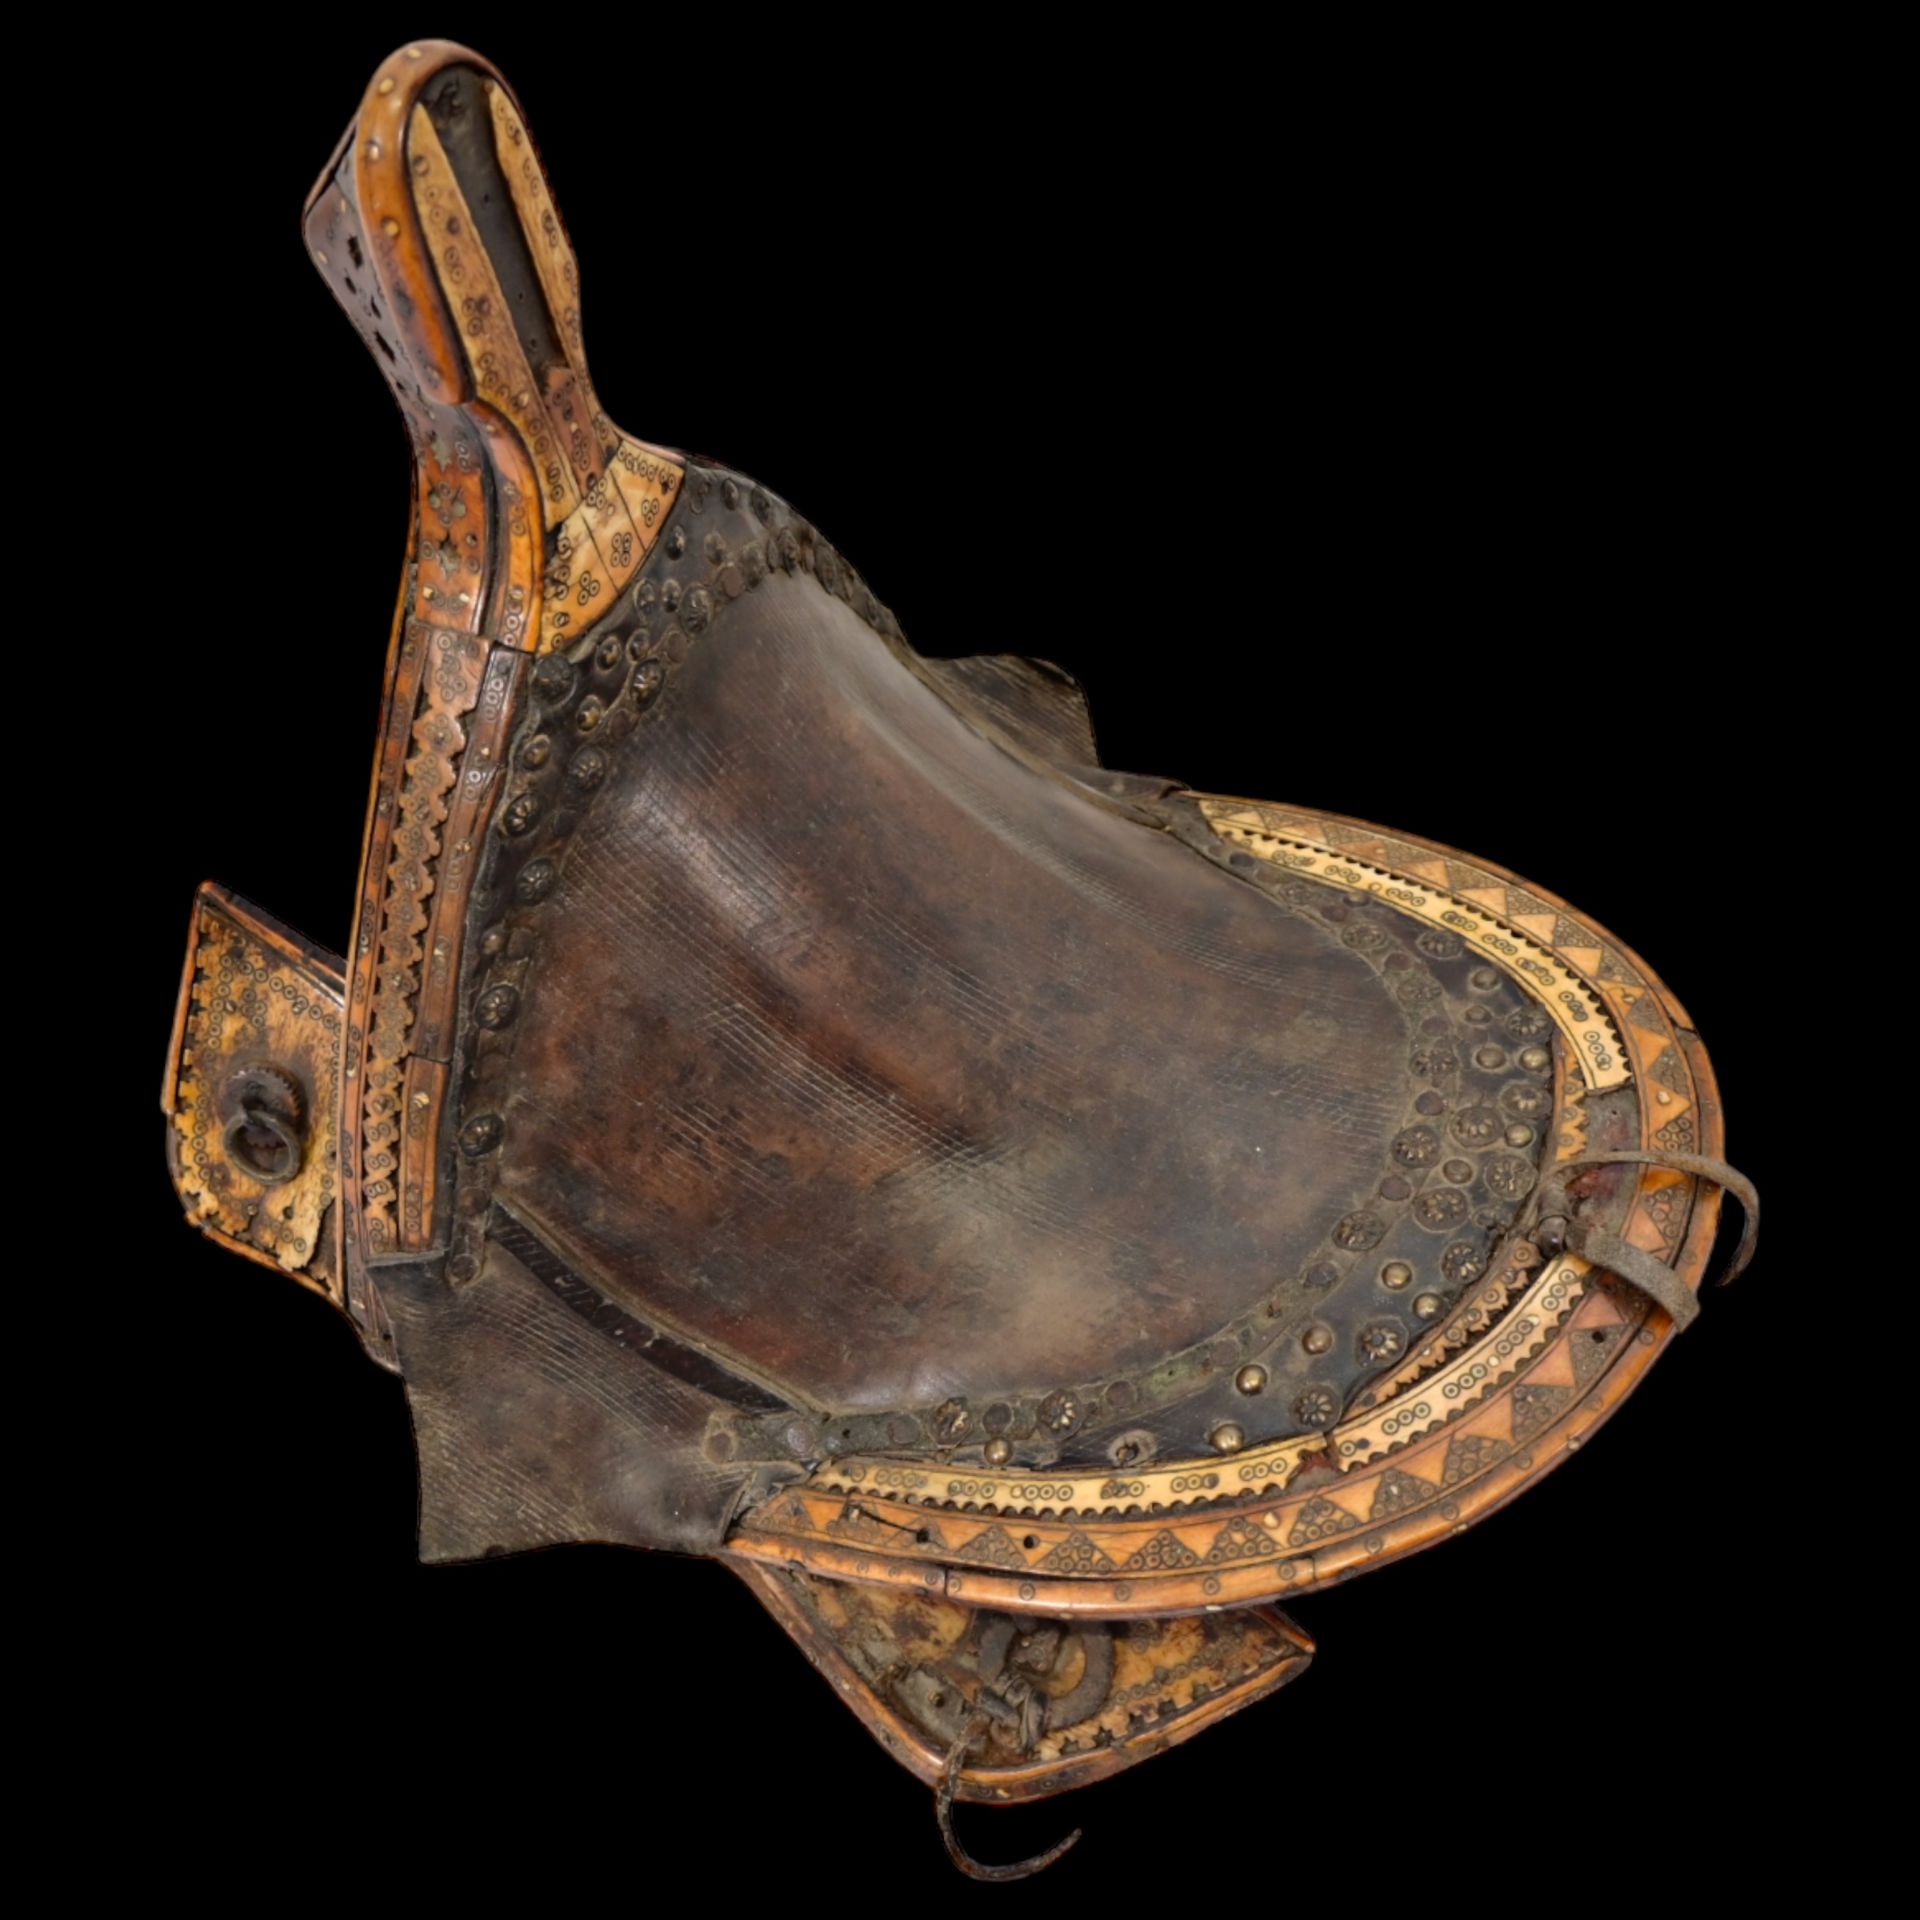 Rare antique Islamic Ottoman, Persian or Central Asia saddle for horseback, 18th century. - Image 10 of 12